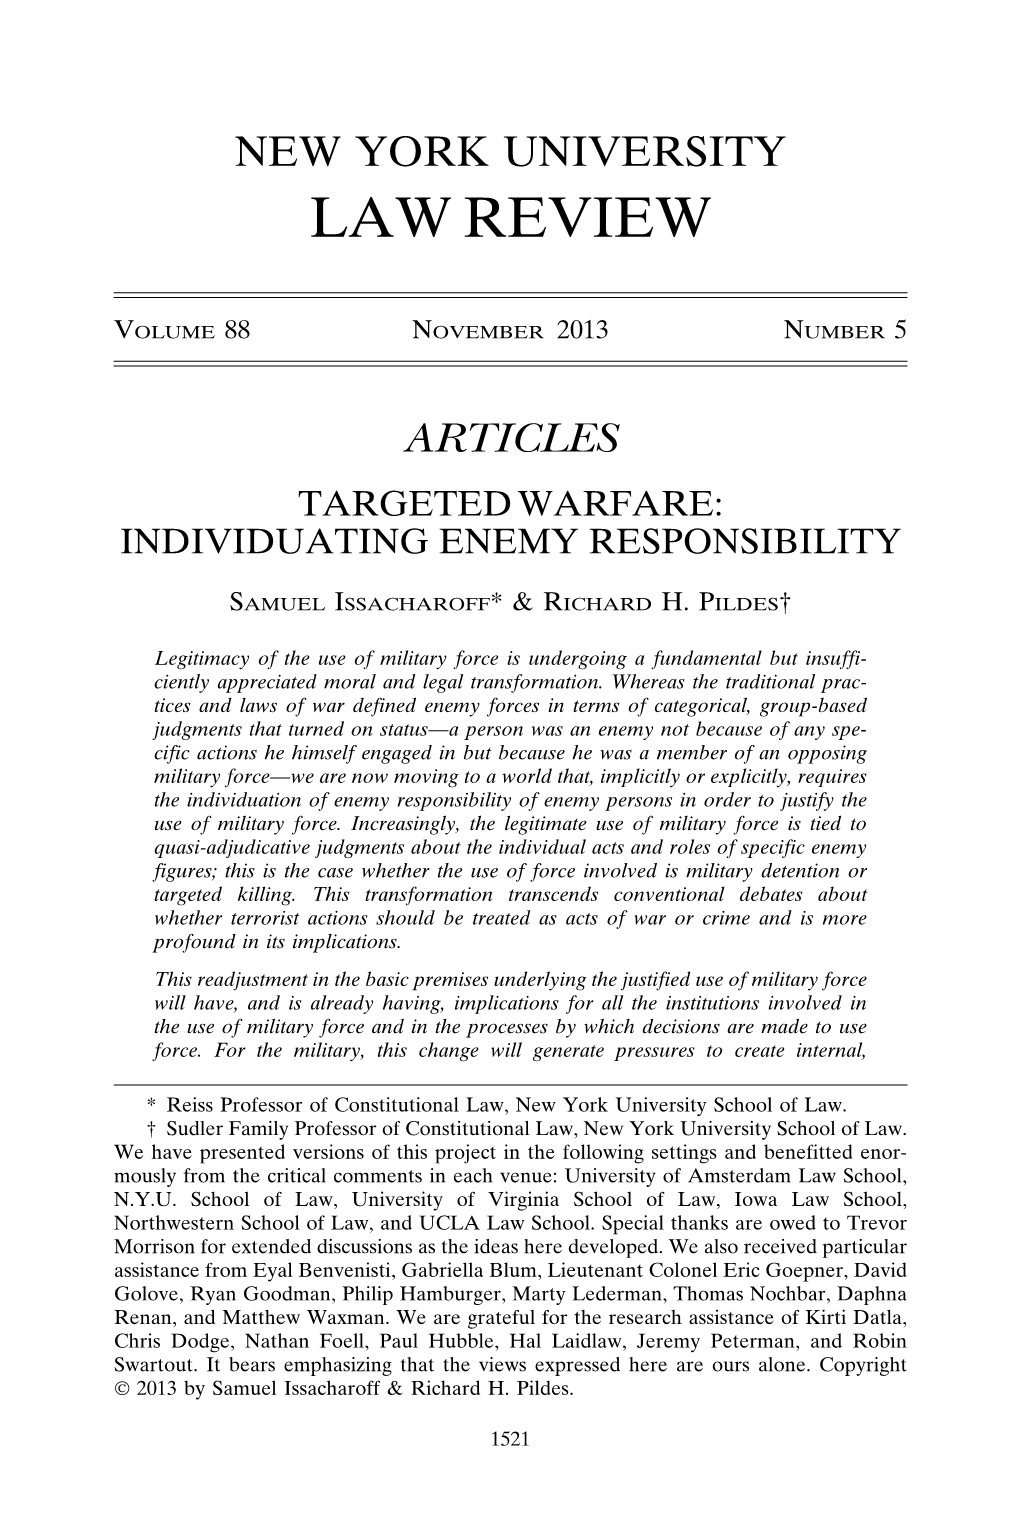 Targeted Warfare: Individuating Enemy Responsibility